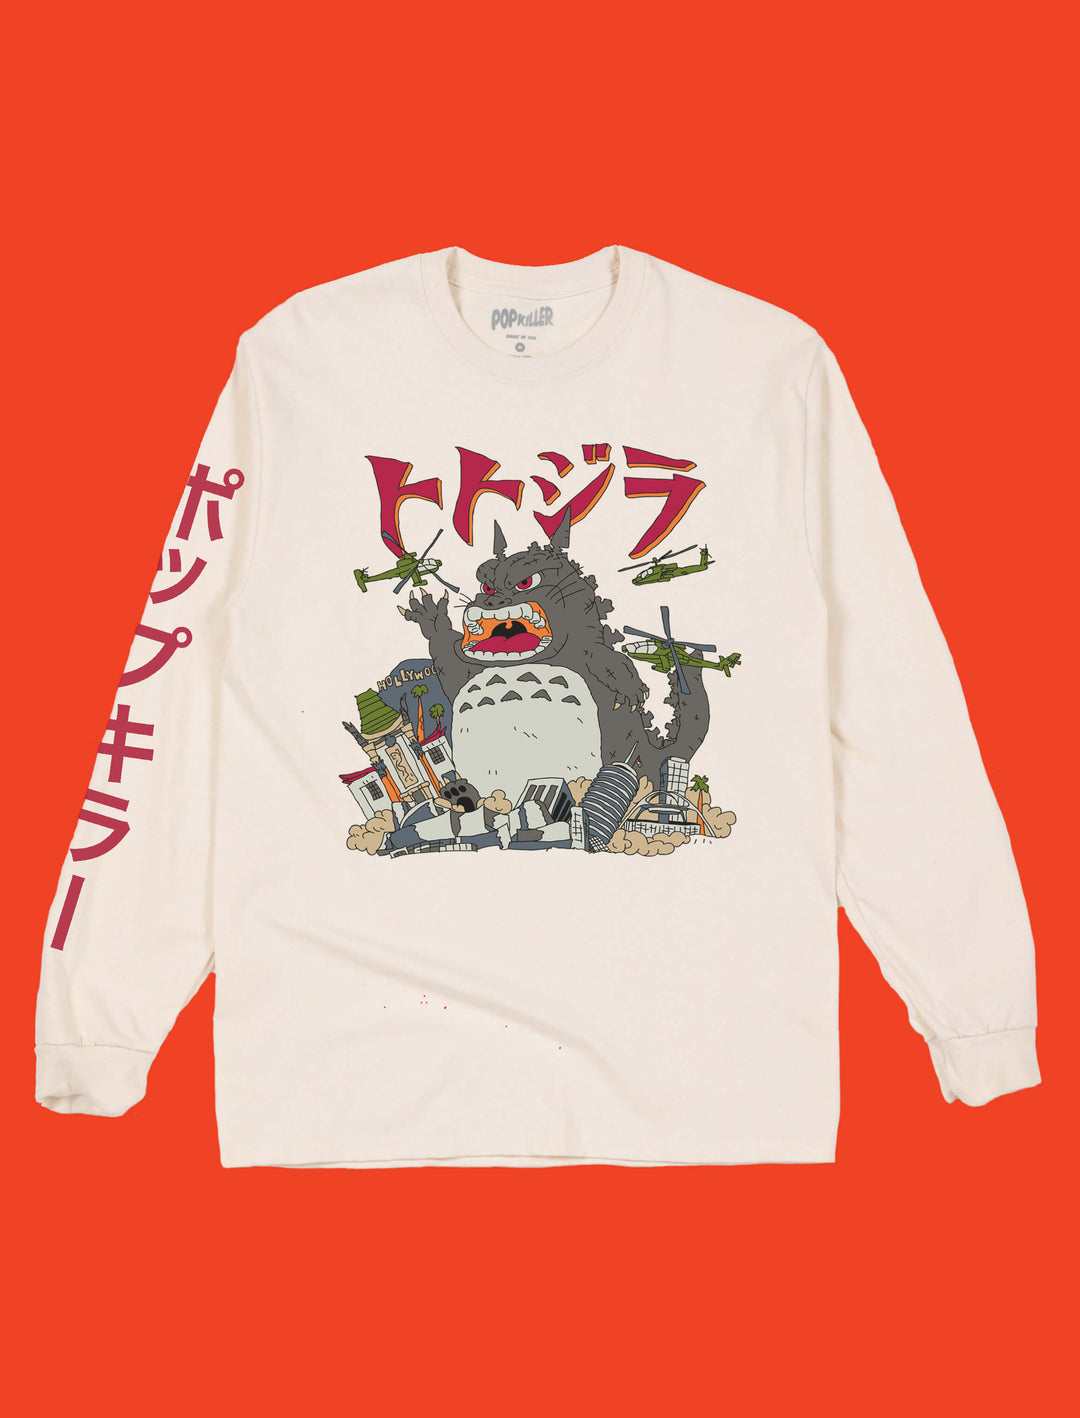 Totoro and godzilla anime inspired apparel unisex long sleeves.